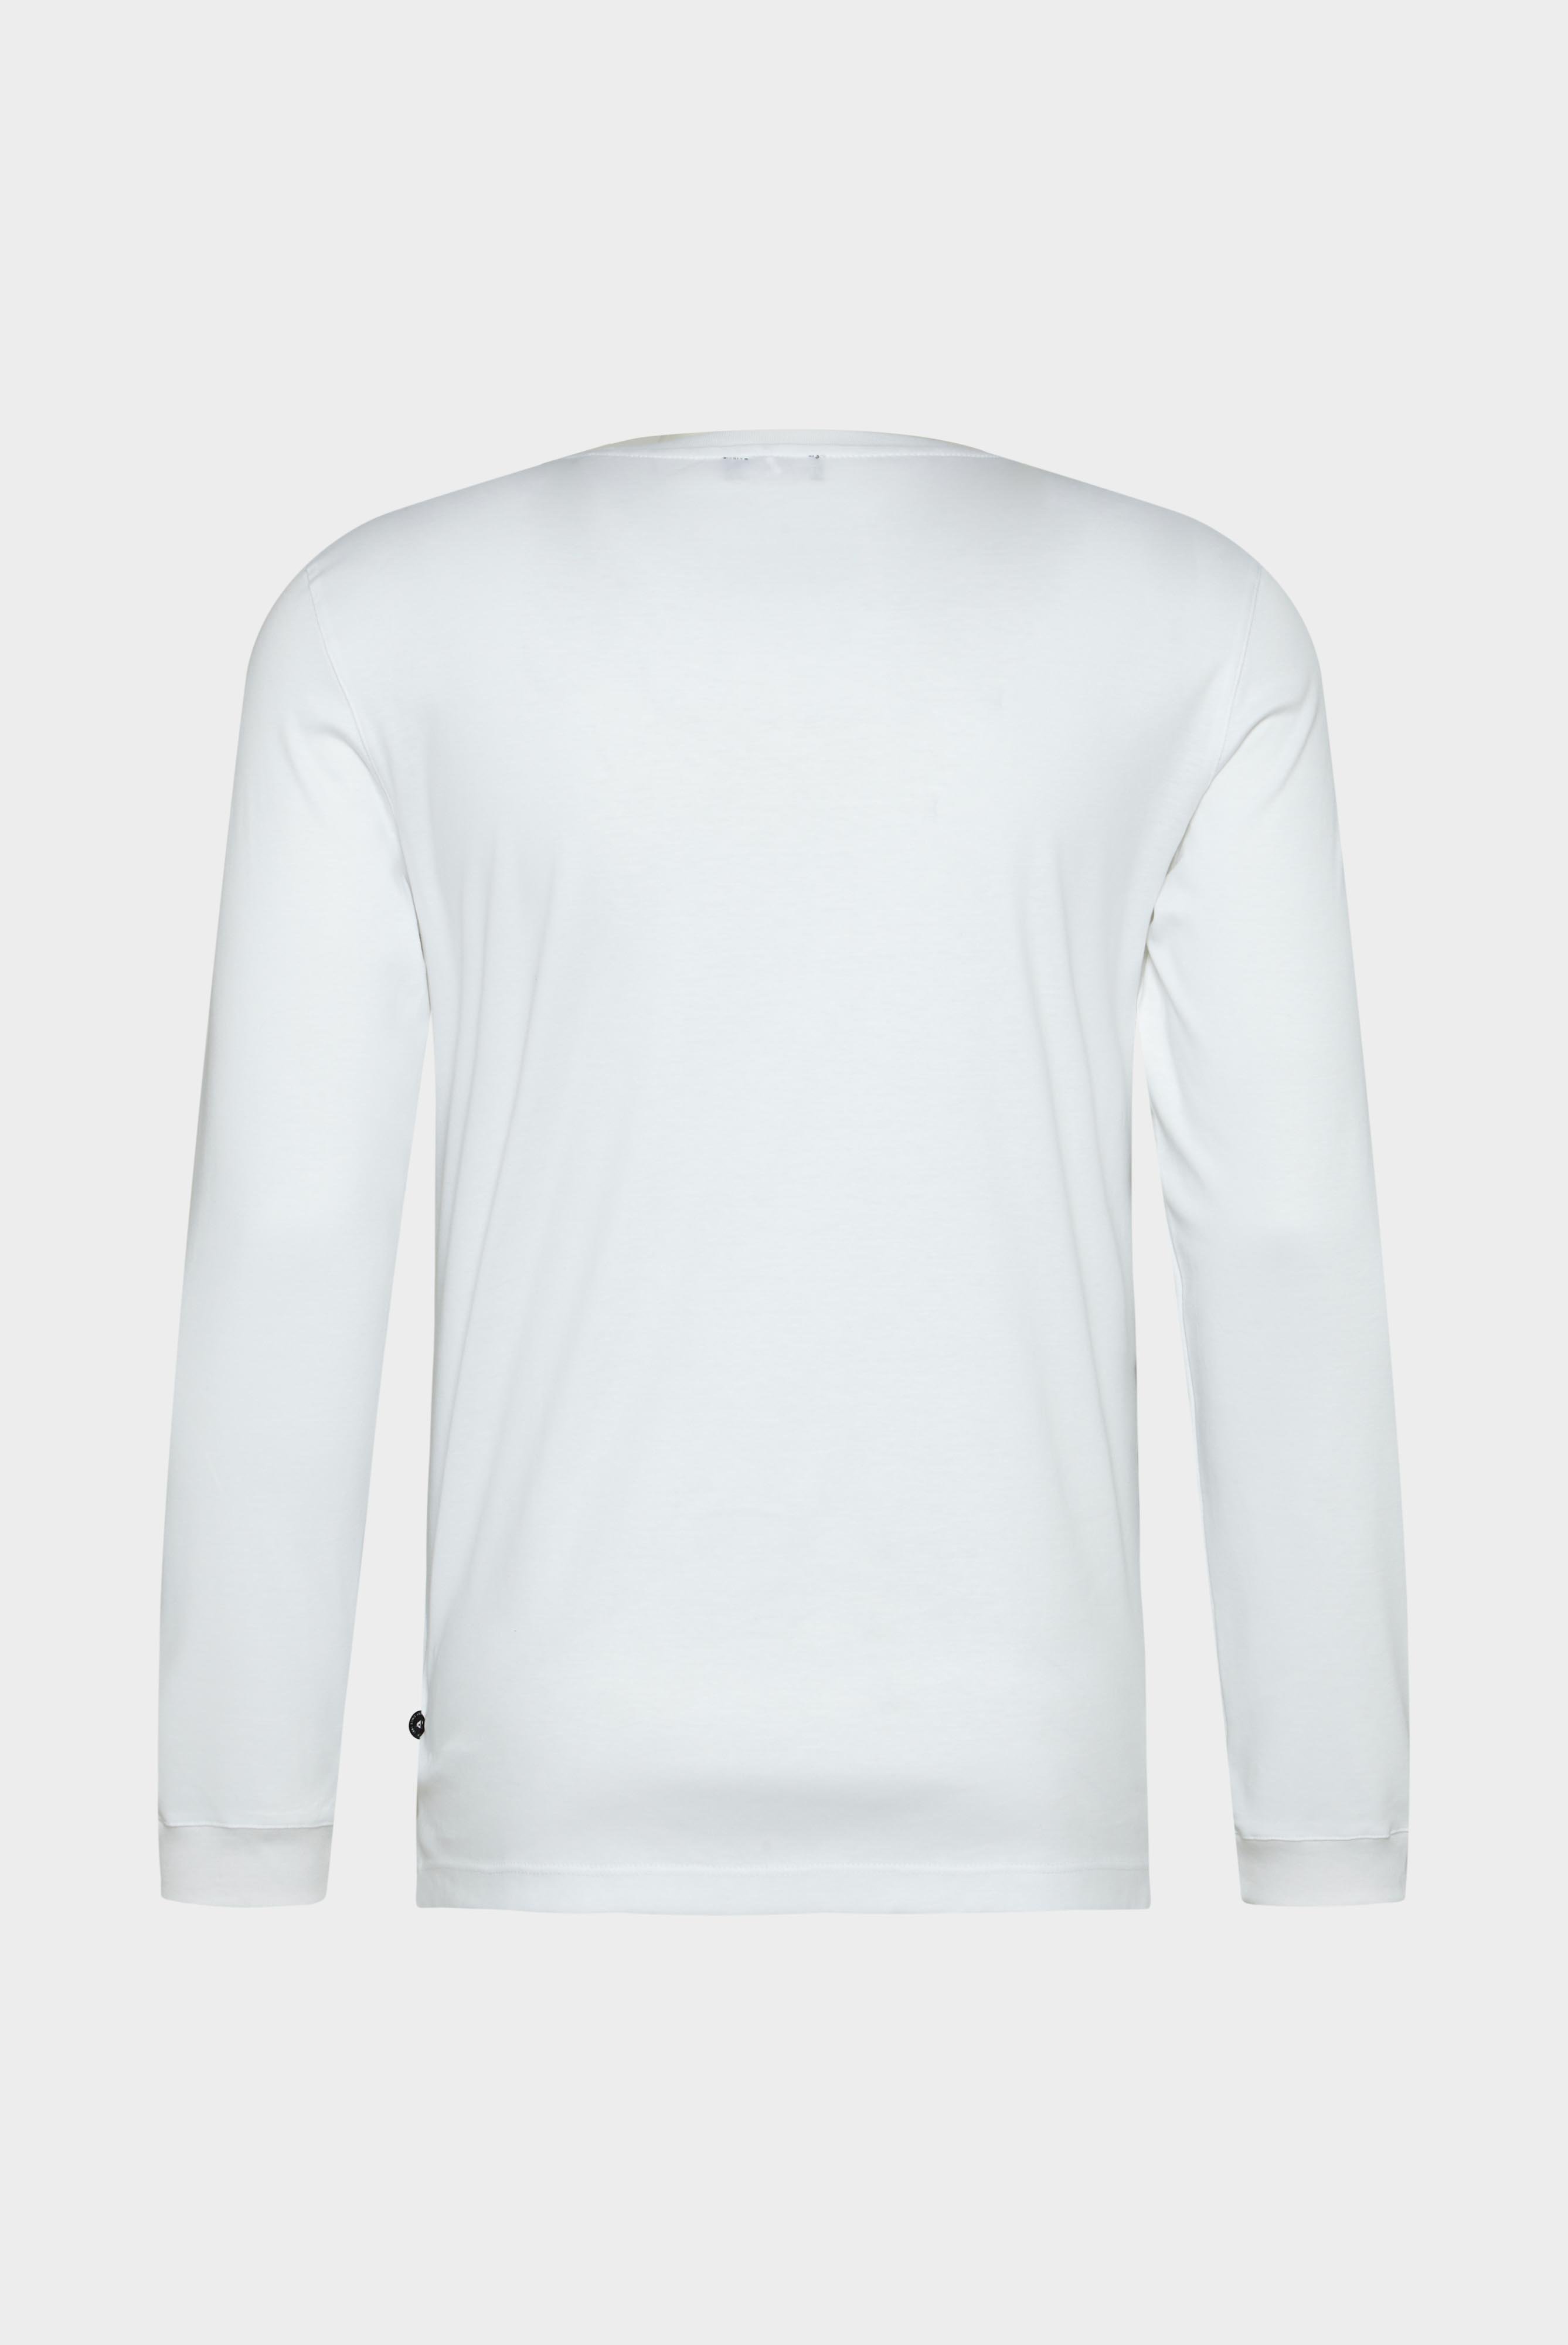 T-Shirts+Langarm Jersey T-Shirt mit Rundhals Slim Fit+20.1718.UX.180031.000.L